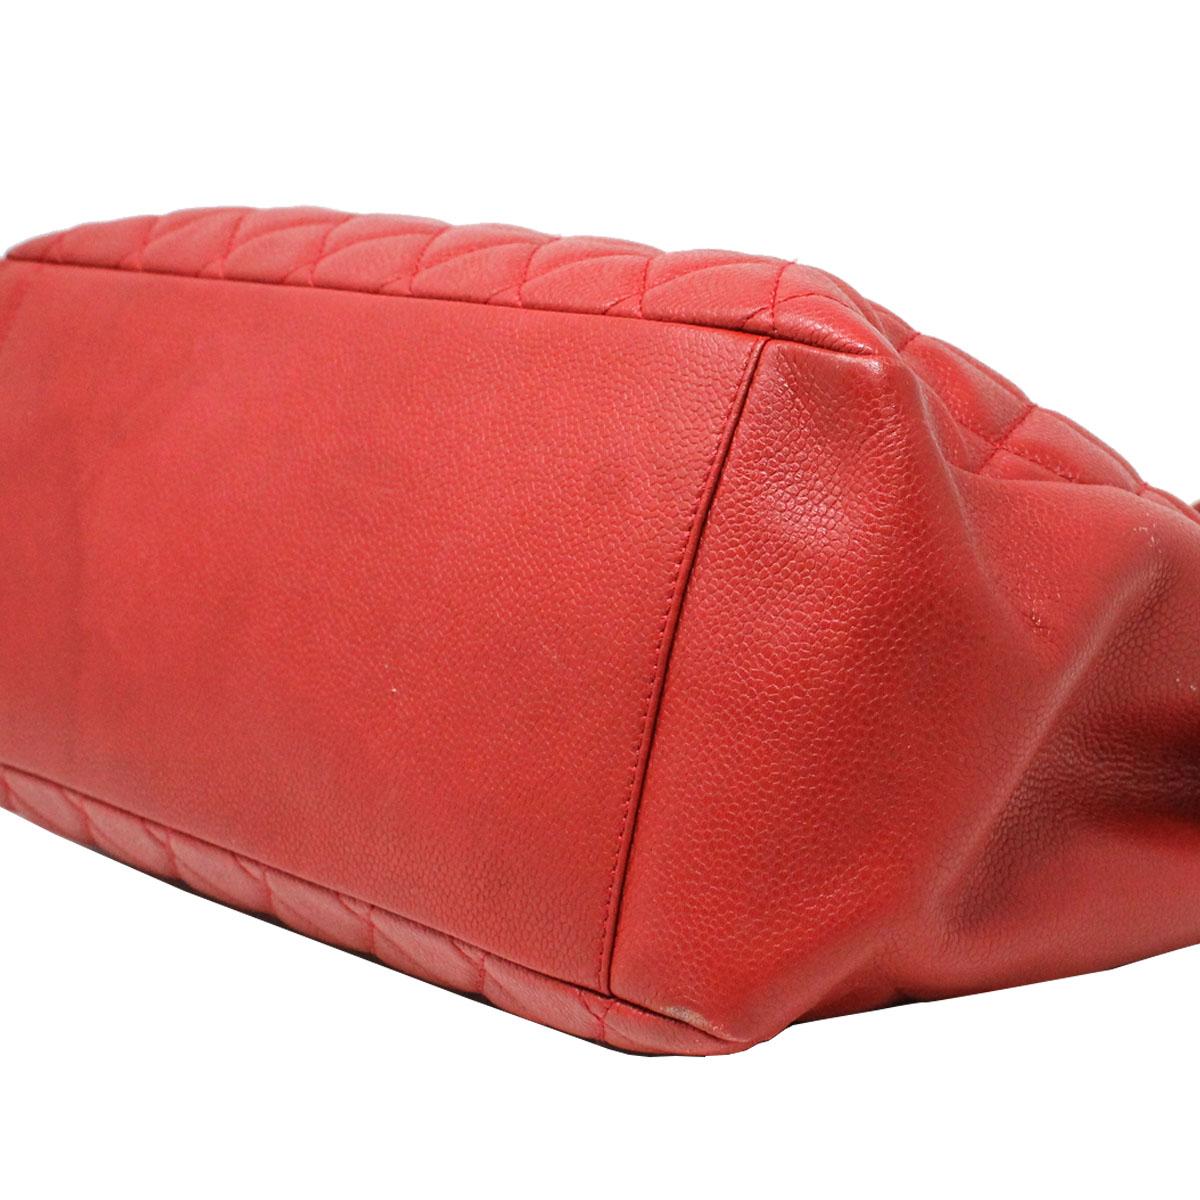 Chanel Grand Shopper Tote GST Red Caviar Leather Shoulder Bag no. 15 4